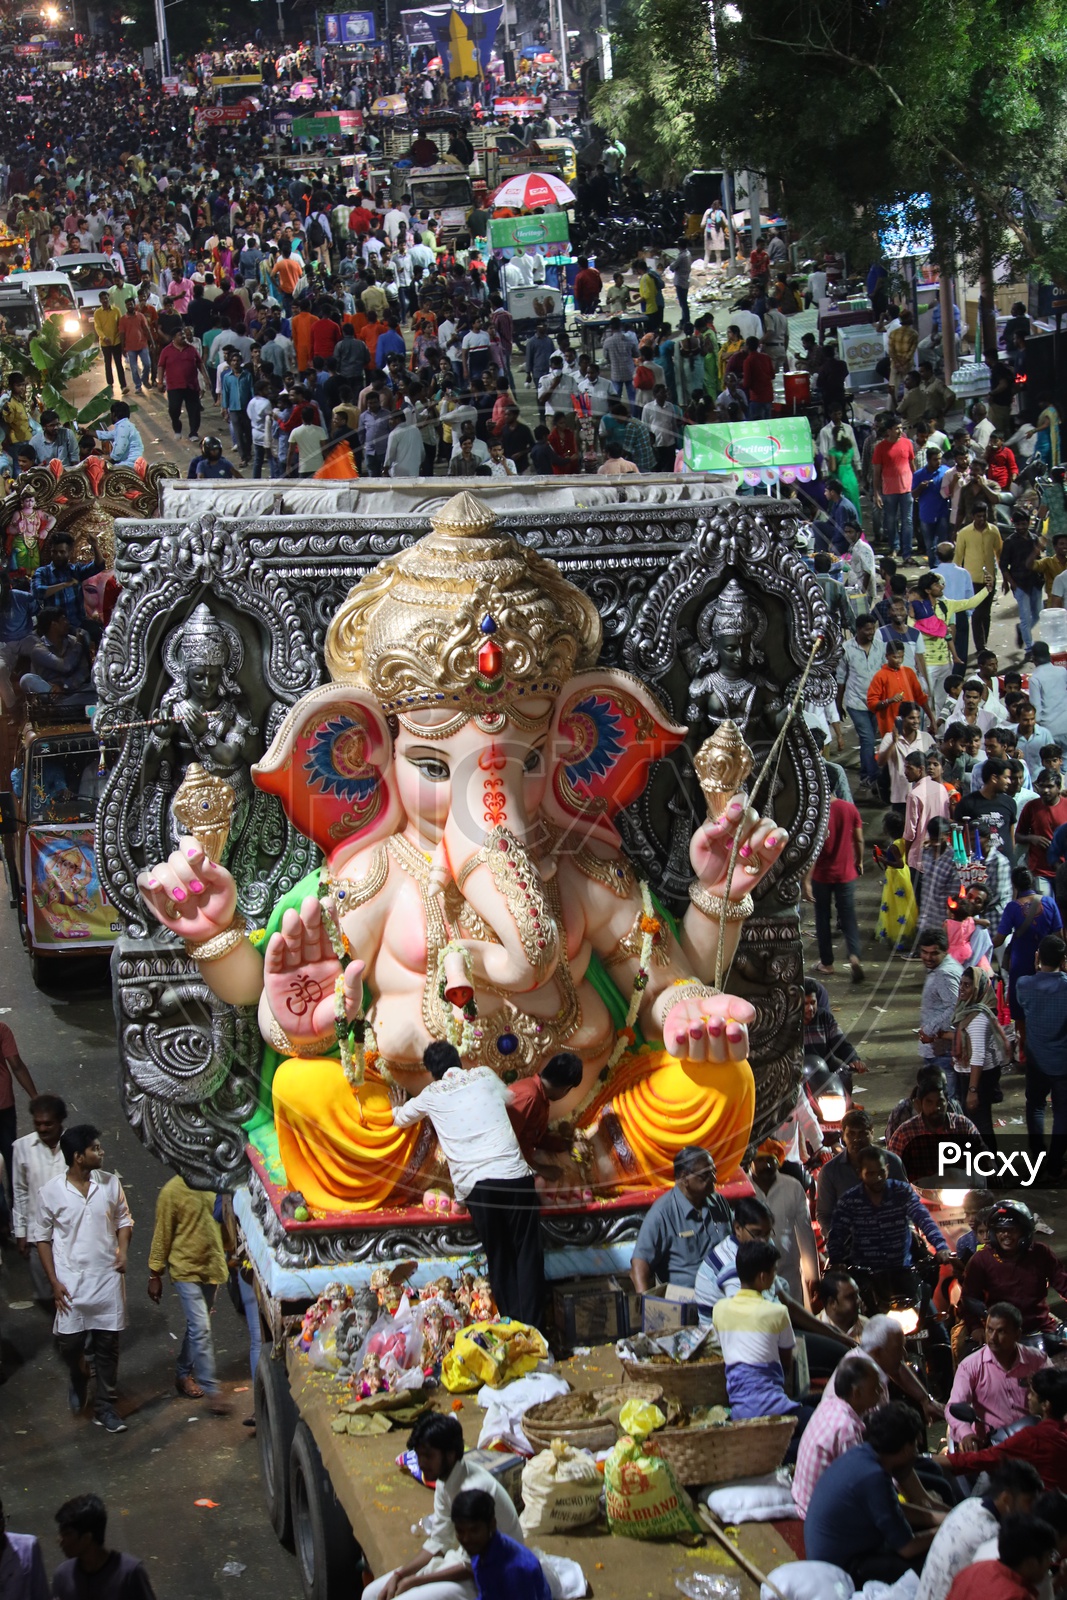 Ganesh Idols In Trucks And Crowd Of Devotees  At Tank Bund For Immersion in Hussain Sagar Lake  During Ganesh Visarjan Or Nimarjan  Event In Hyderabad